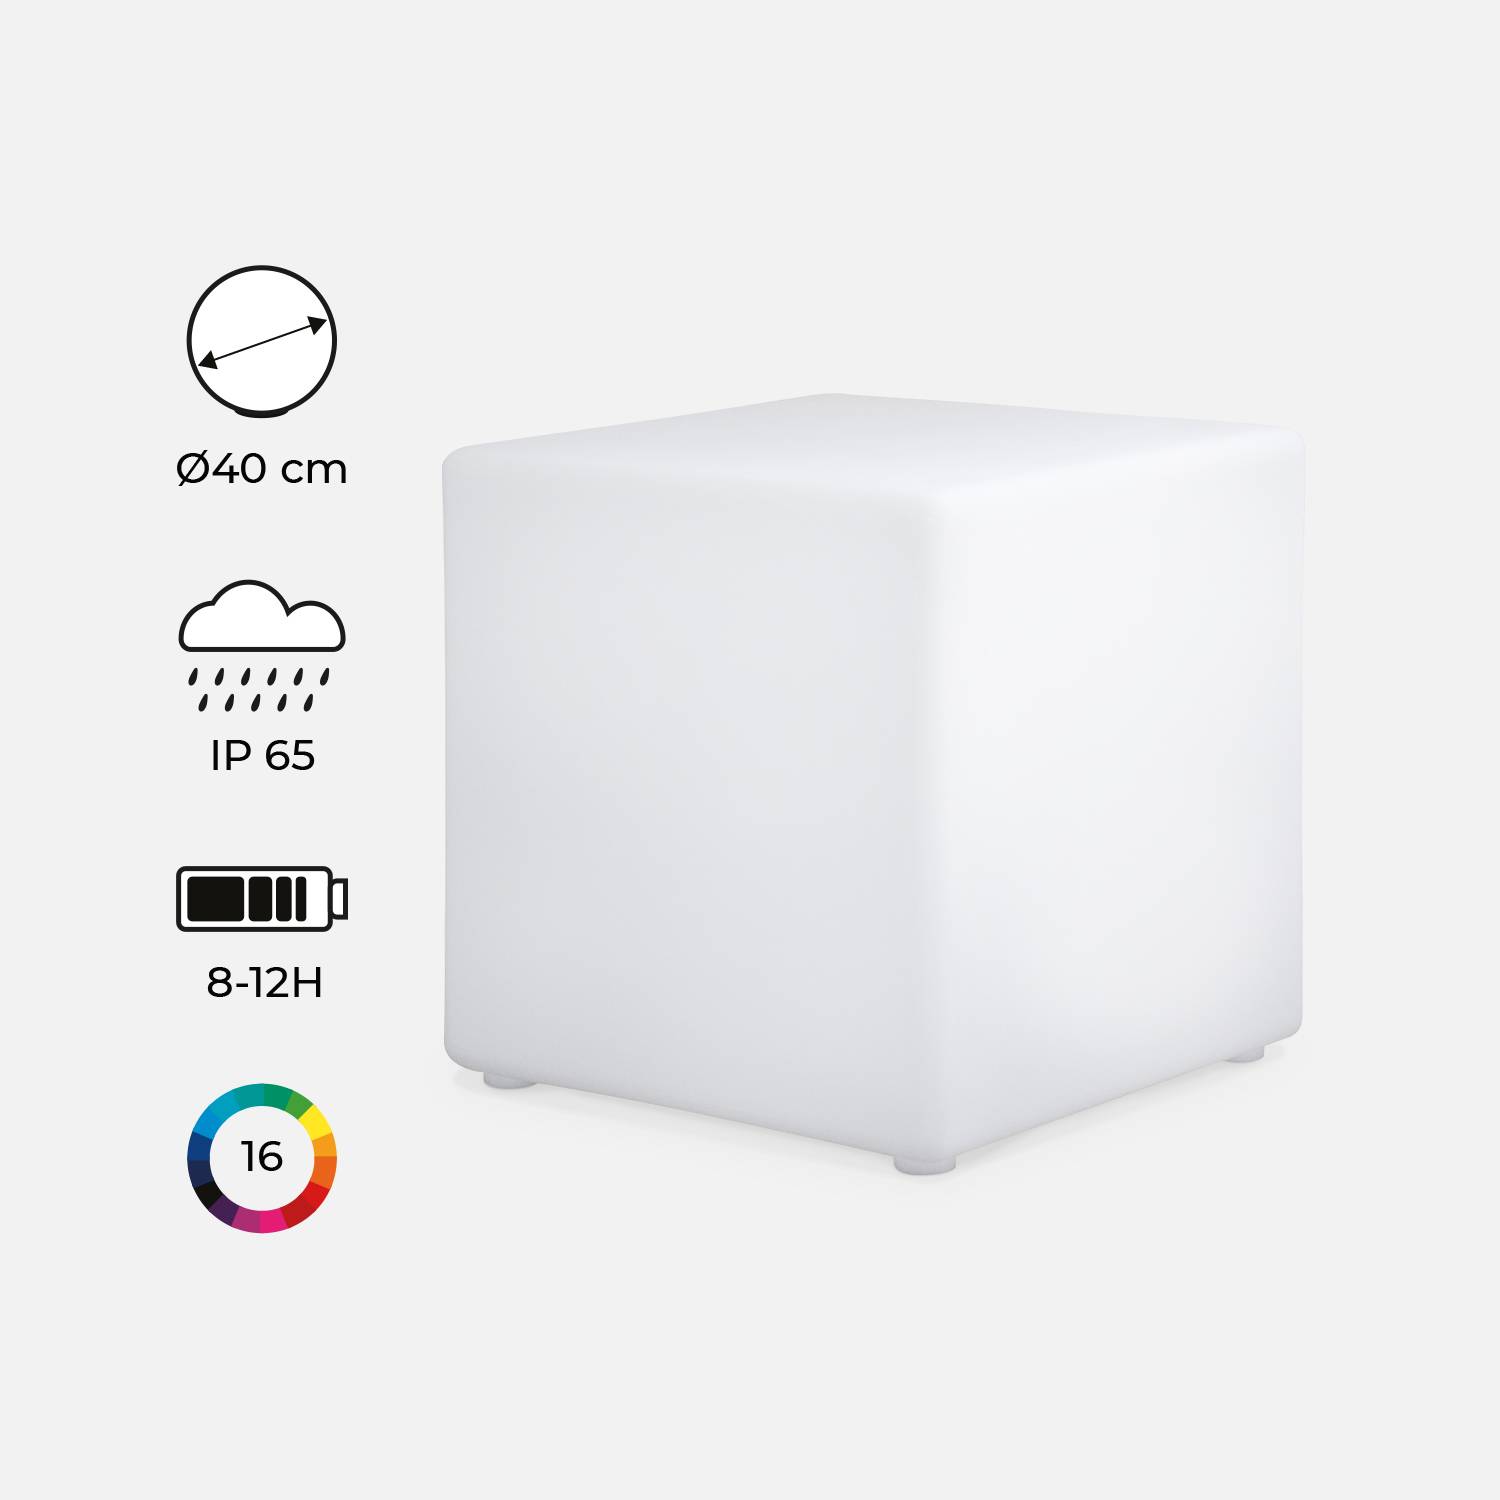 Cubo luminoso LED multicolor recargable sin cables para exterior  - 16 colores  - CUBO LED 40cm Photo1